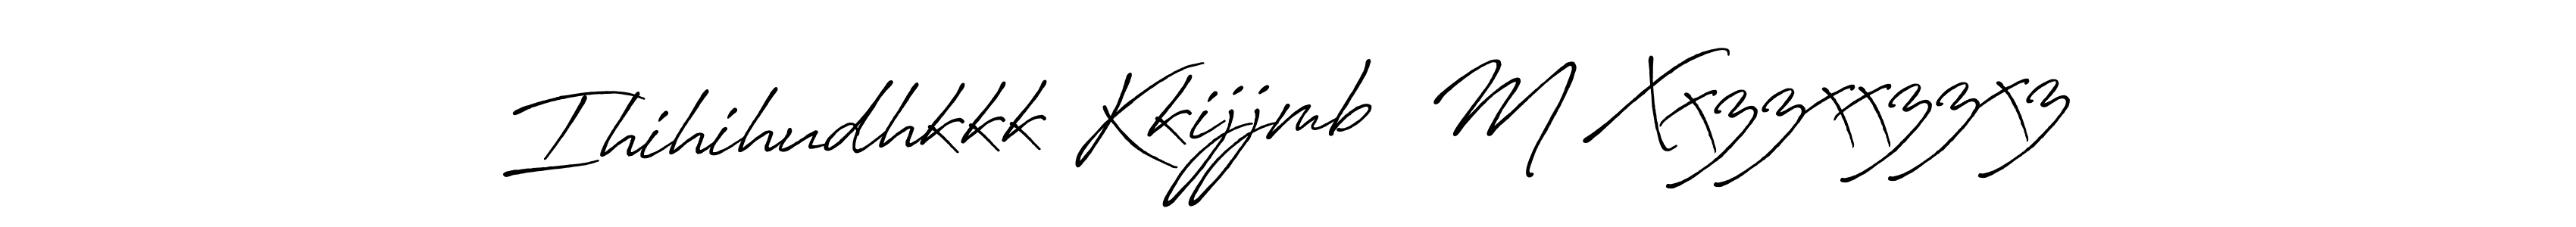 Check out images of Autograph of Ihihihudhkkk Kkijjmb  M Xxzzxxzzxz name. Actor Ihihihudhkkk Kkijjmb  M Xxzzxxzzxz Signature Style. Antro_Vectra_Bolder is a professional sign style online. Ihihihudhkkk Kkijjmb  M Xxzzxxzzxz signature style 7 images and pictures png